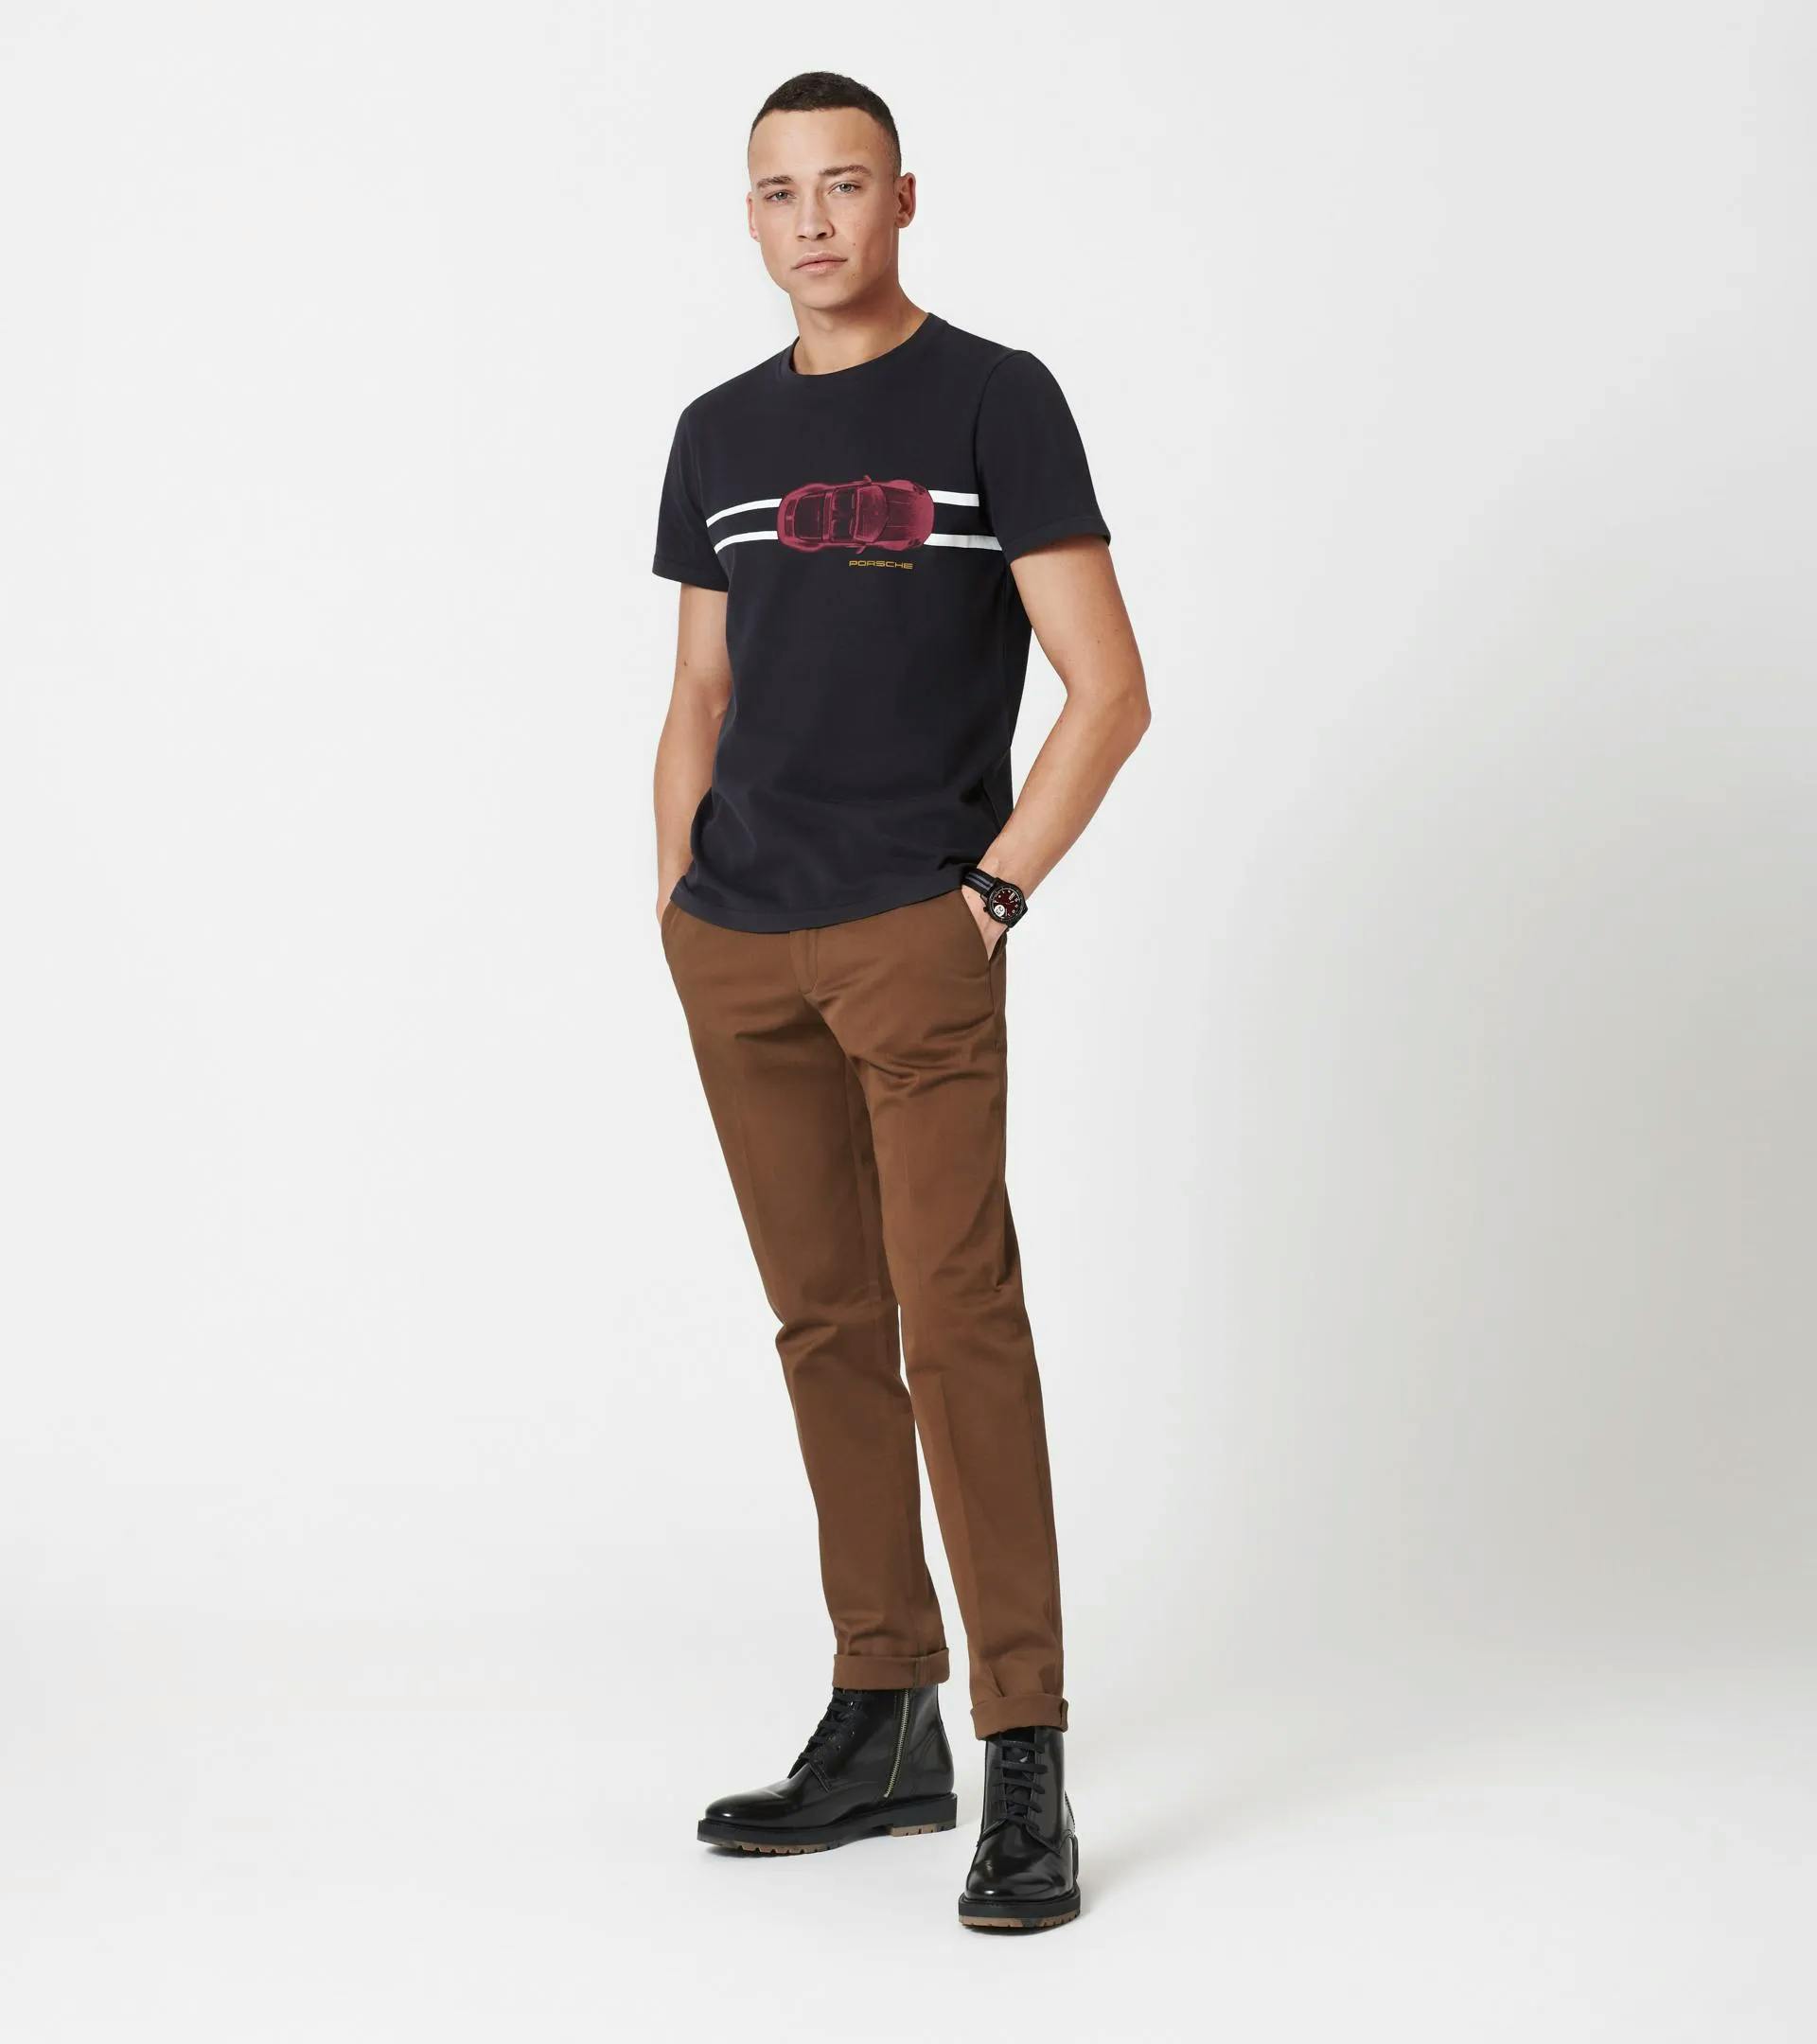 Collector's T-Shirt No. 19 unisex – Heritage – Ltd. 6